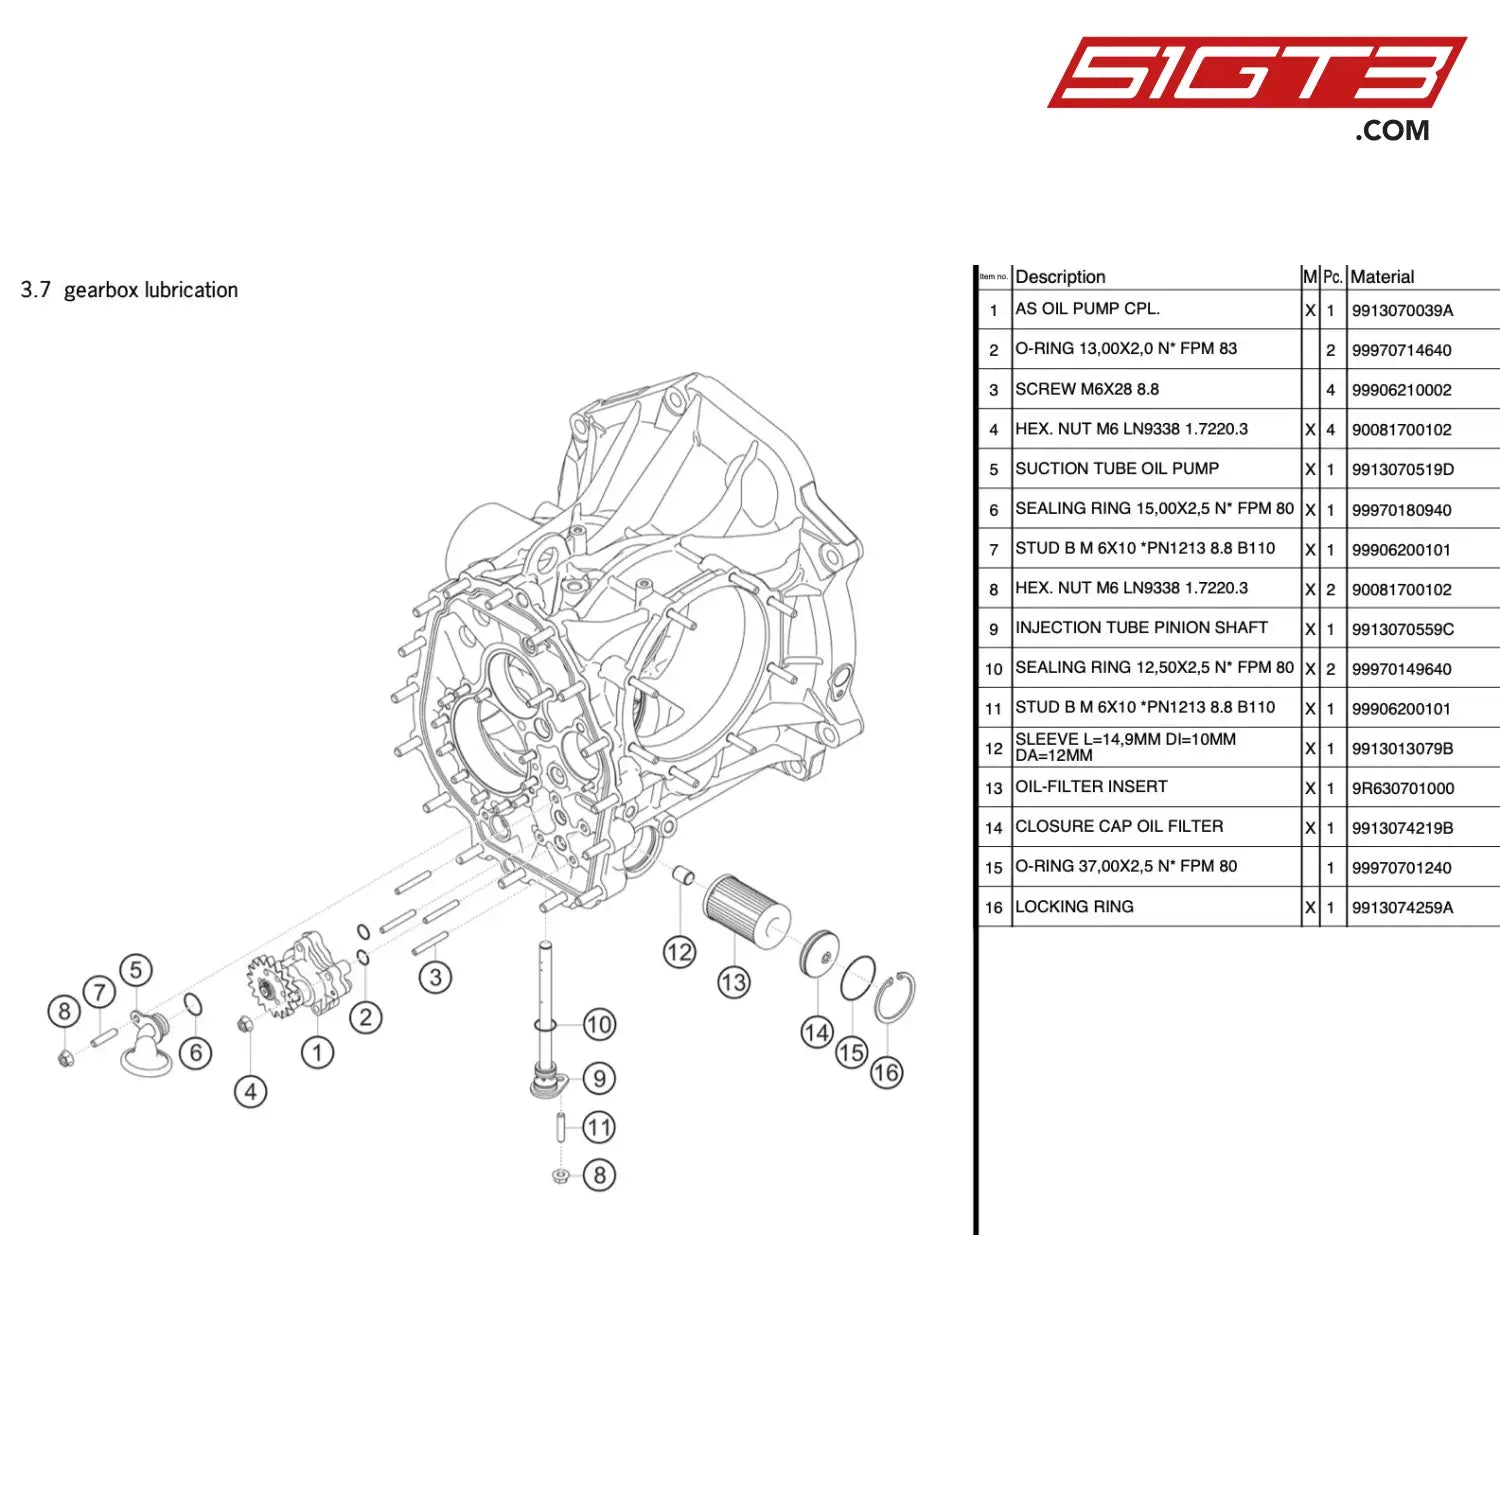 Injection Tube Pinion Shaft - 9913070559C [Porsche 911 Gt3 R Type 991 (Gen 1)] Gearbox Lubrication